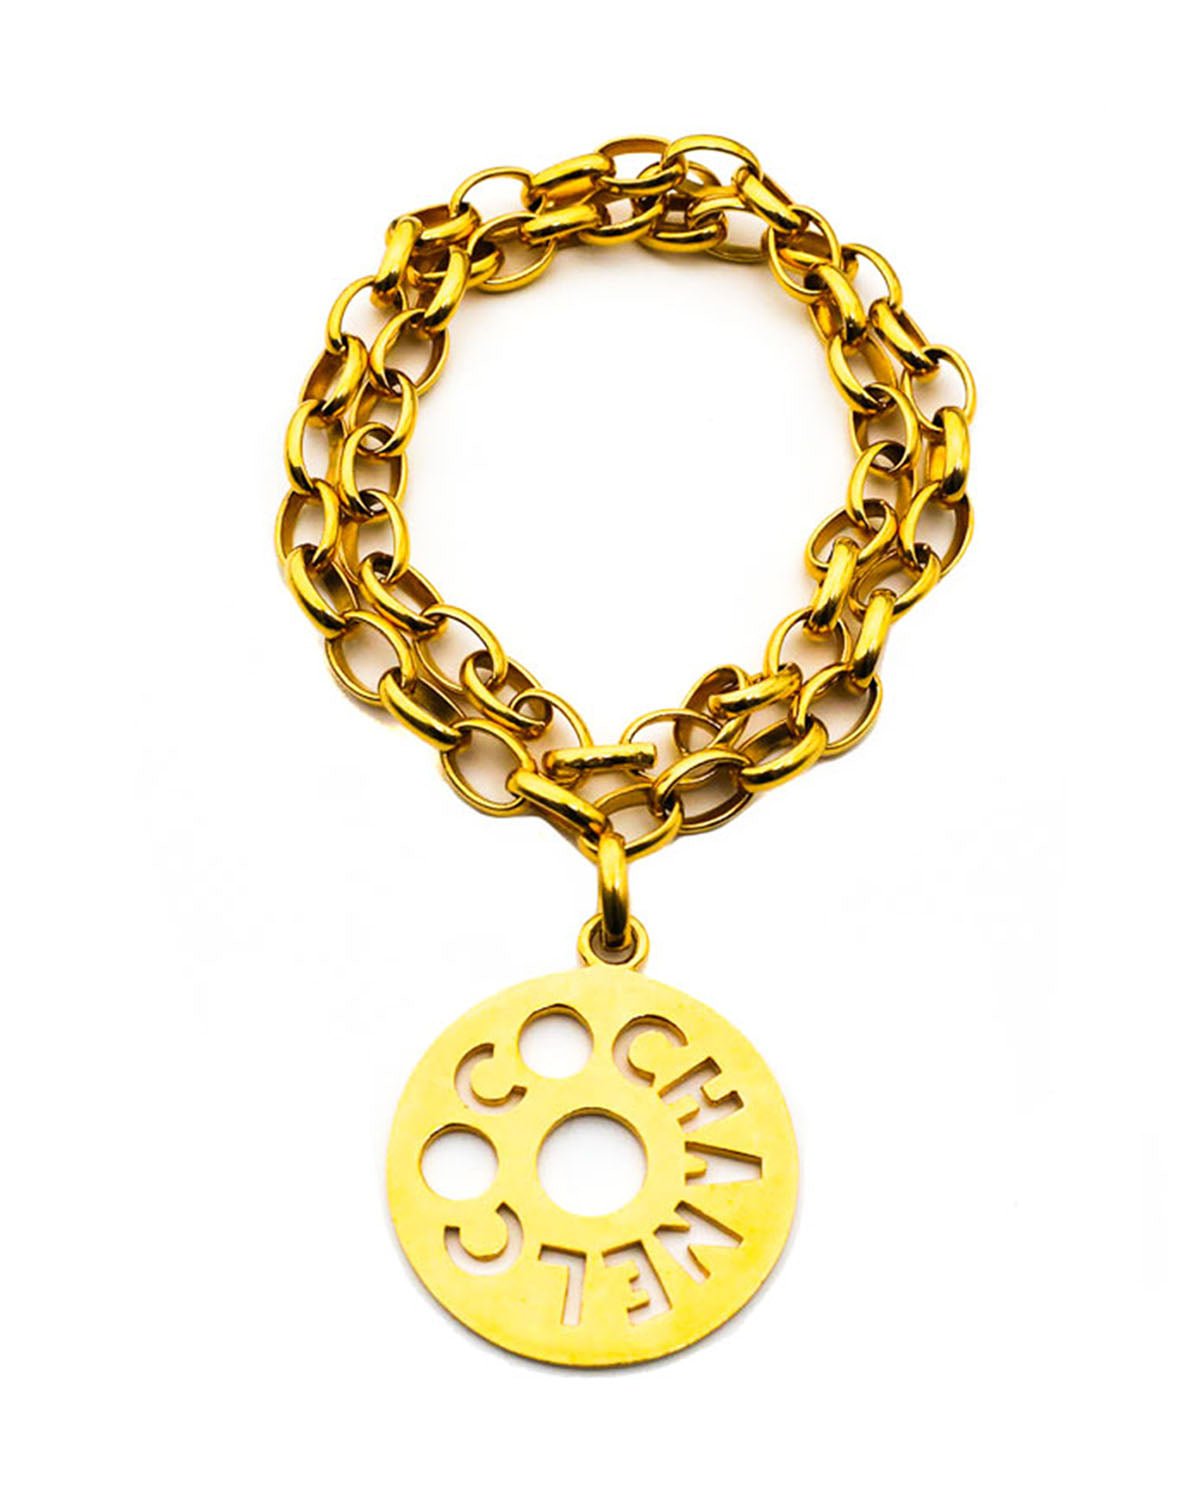 Vintage CHANEL COCO CHANEL Medallion Necklace or Belt